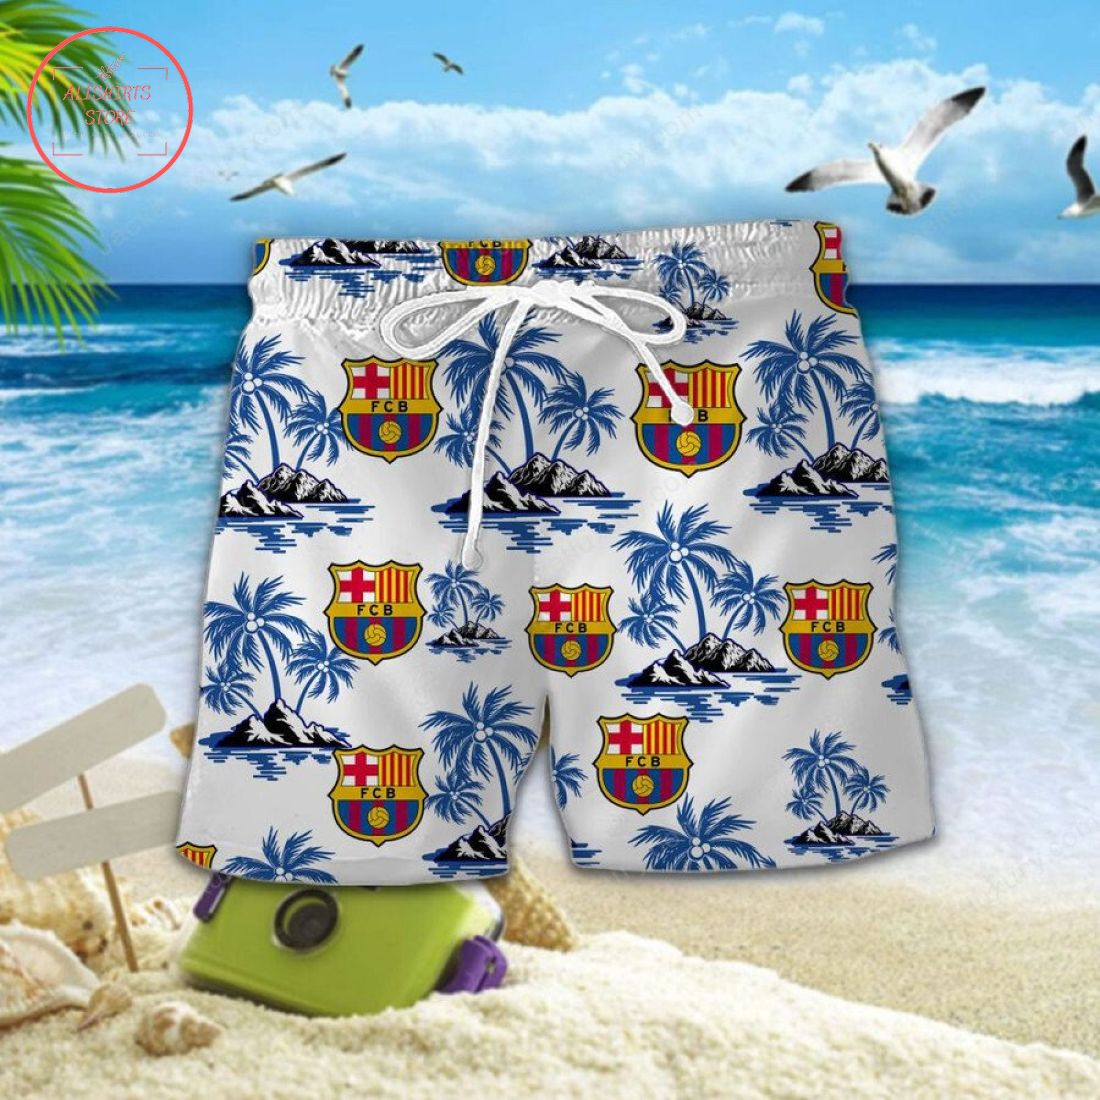 FC Barcelona Hawaiian Shirt and Shorts